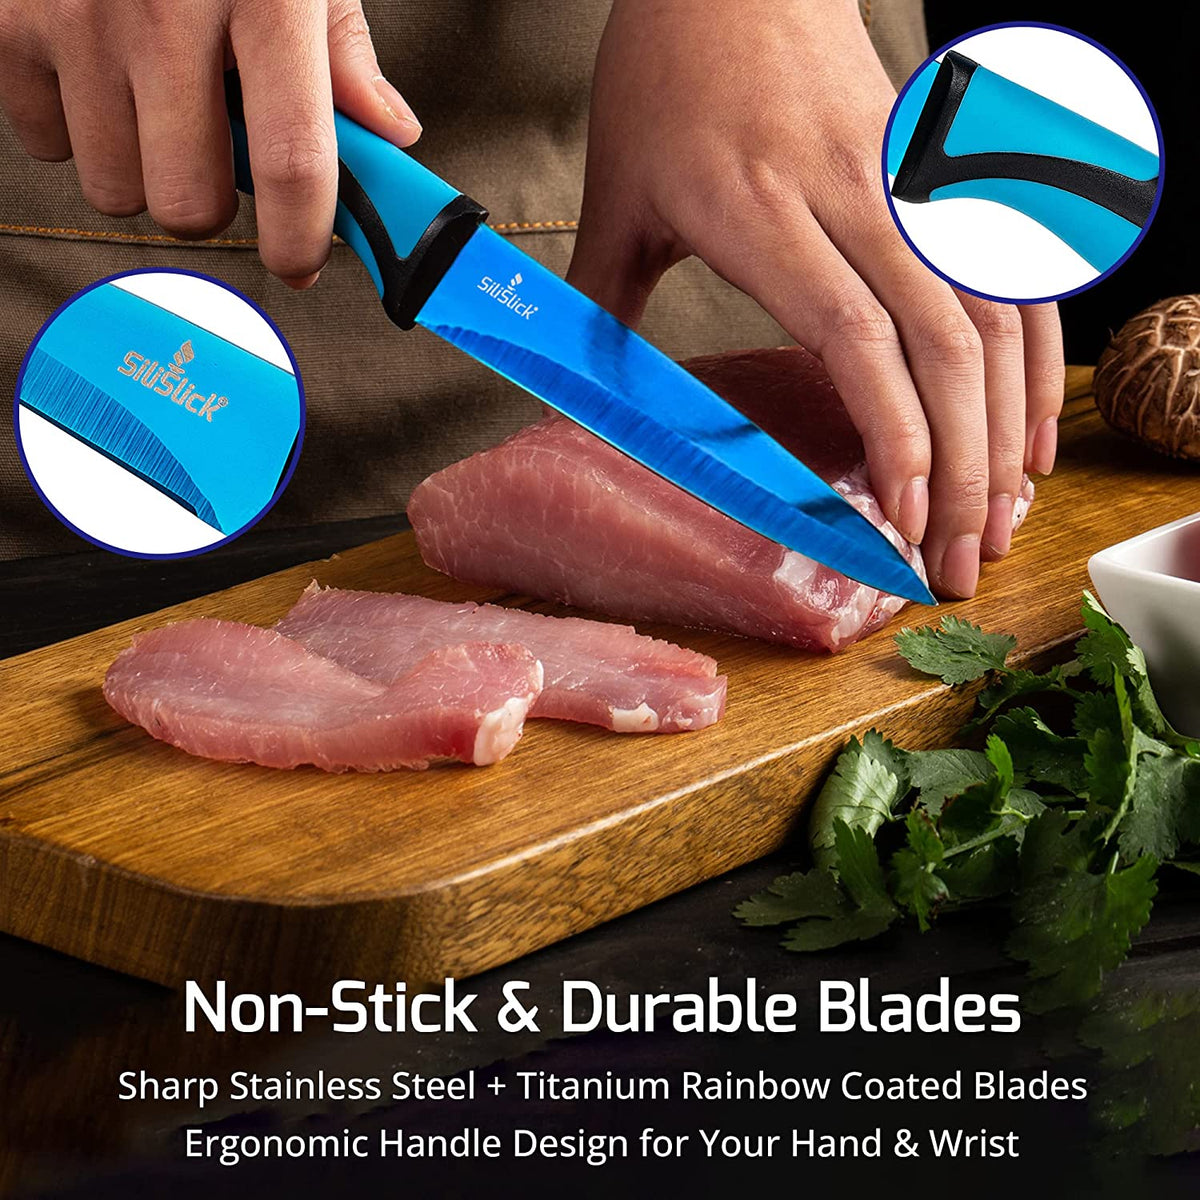 SiliSlick Kitchen Knife Set - Blue Handle  5 Stainless Steel Knives –  SiliSlick®